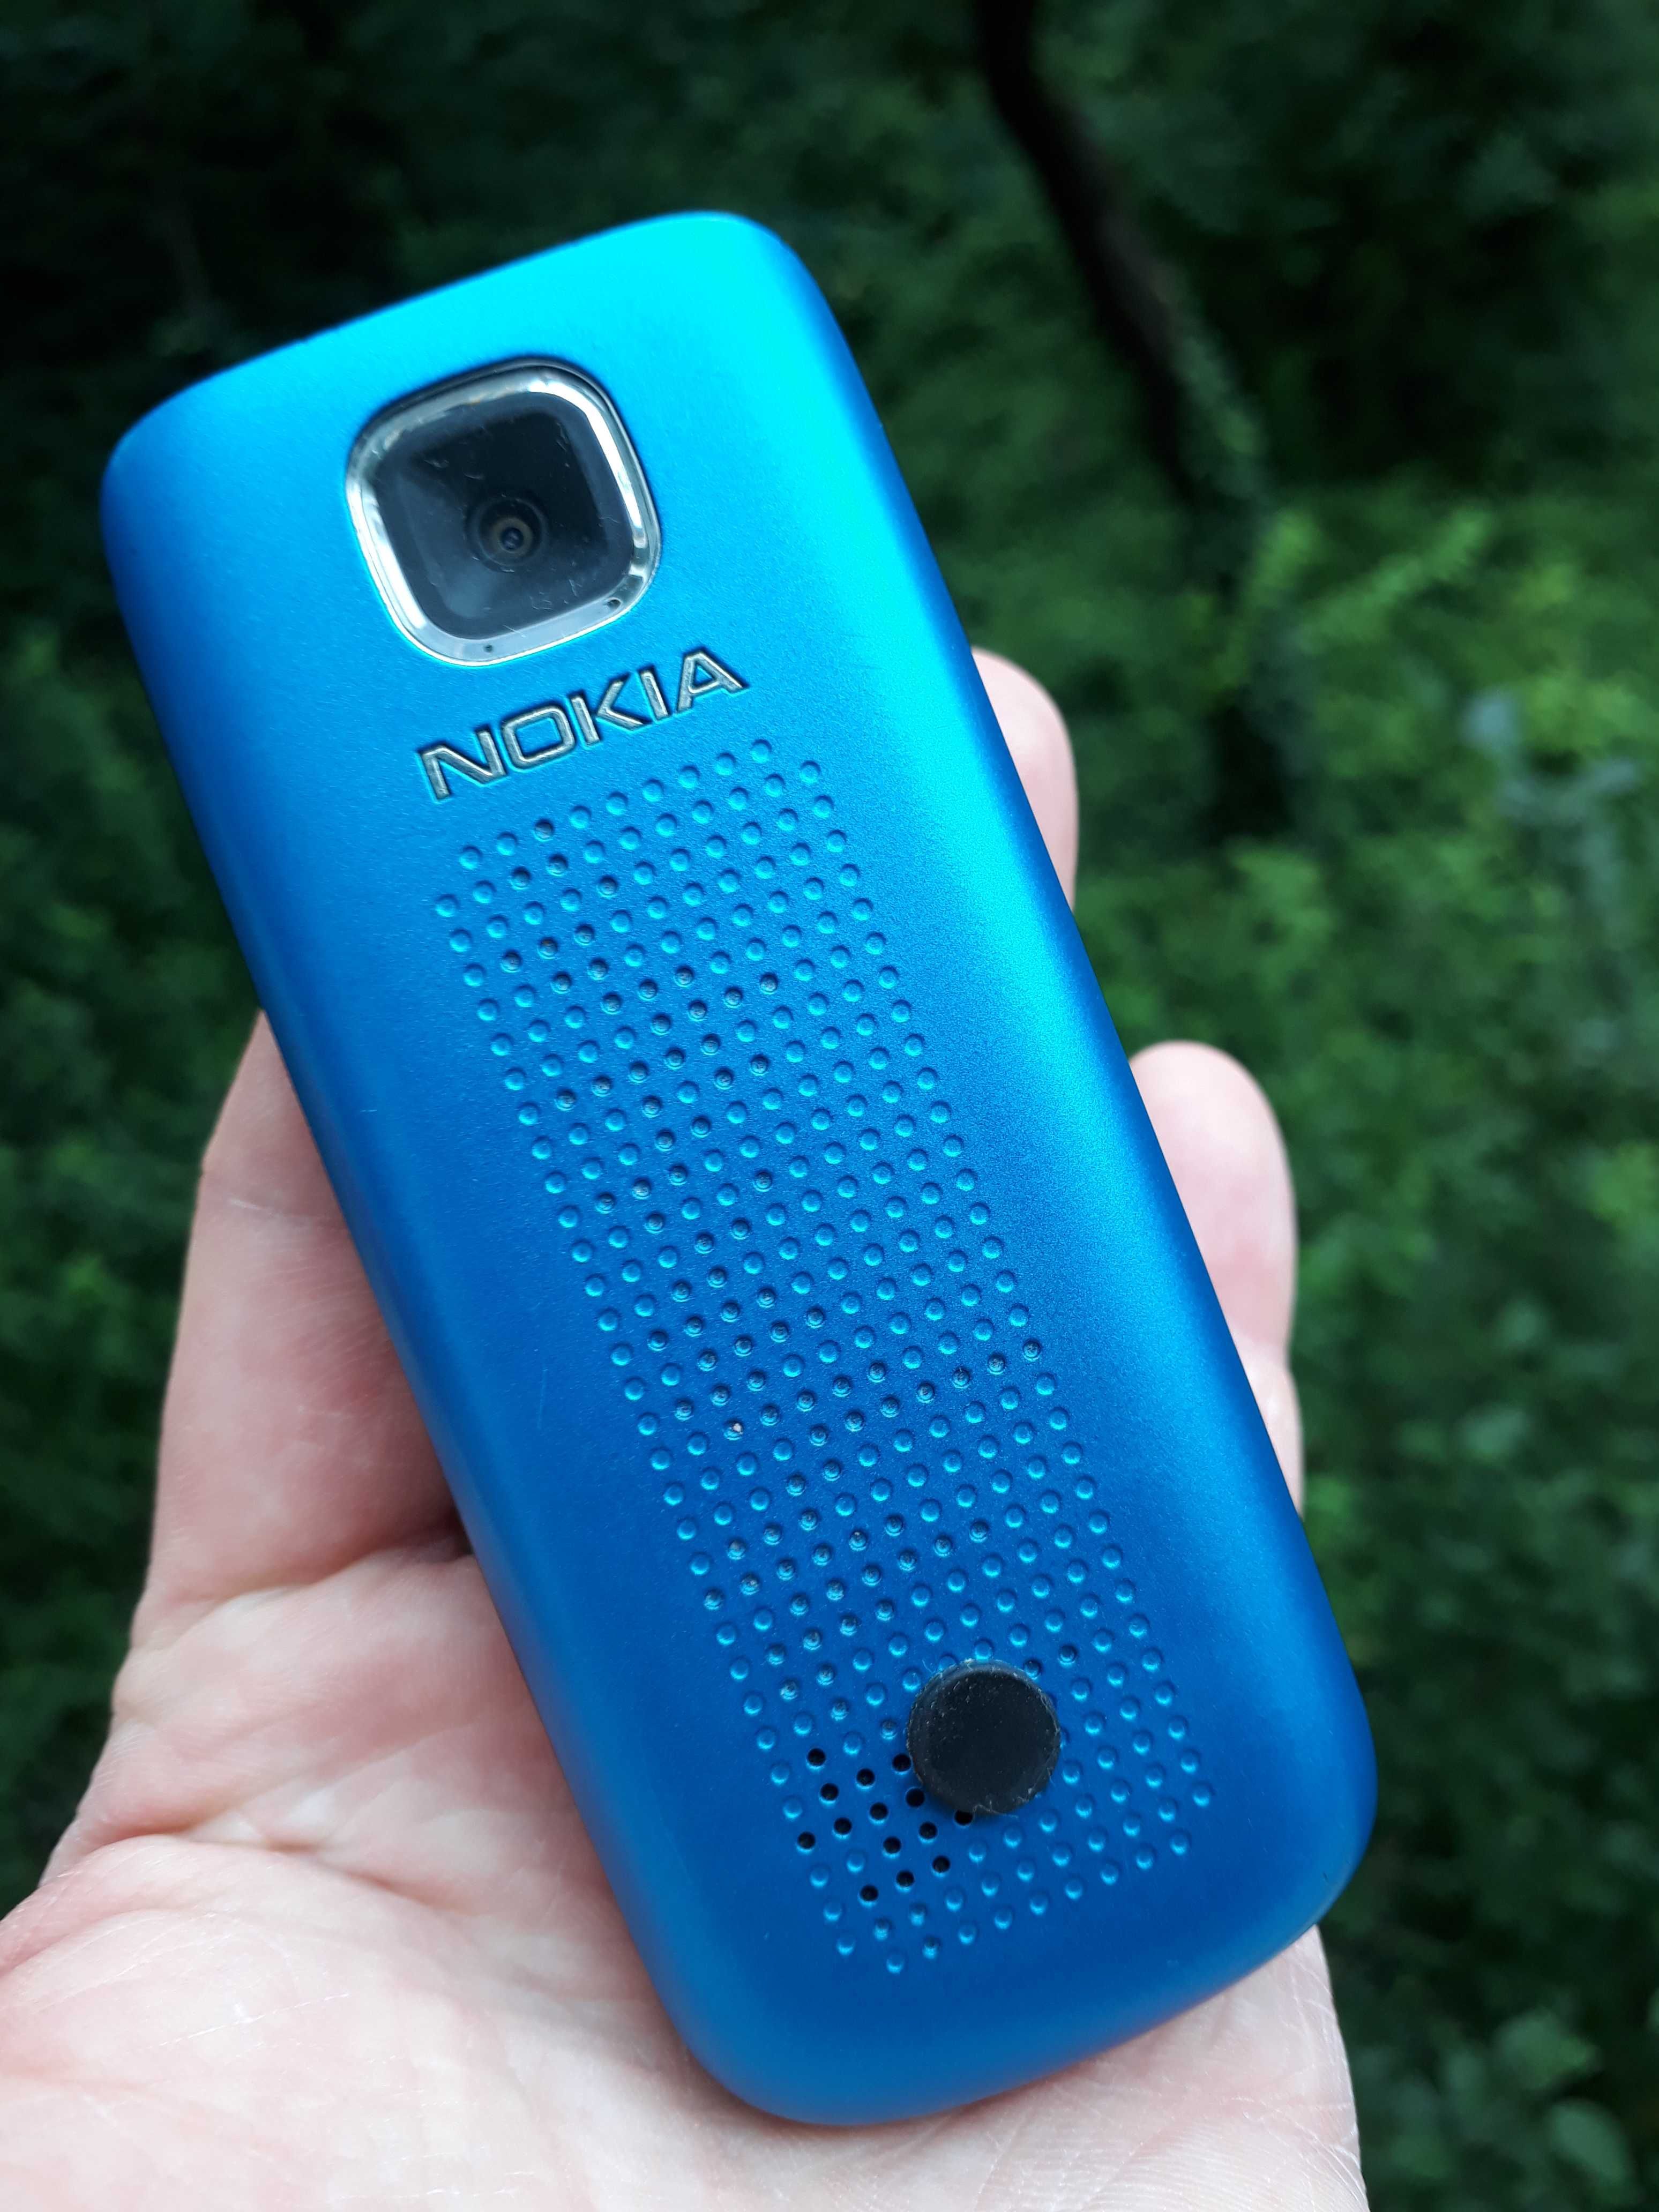 Nokia 2690 albastru decodat original perfect functional stare f buna